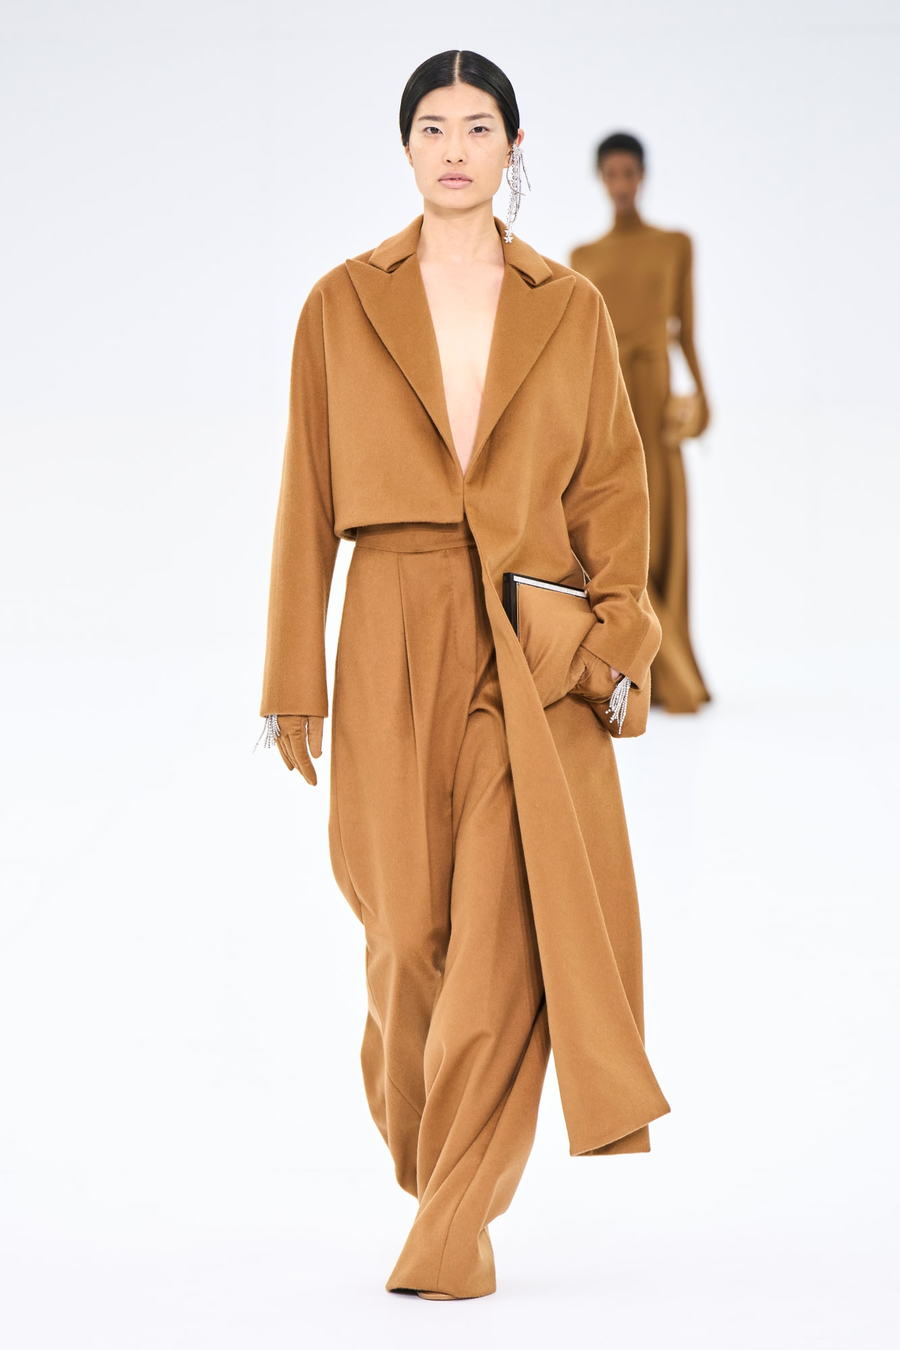 Oversized pantsuit by Fendi at Paris Fashion Week 2022.